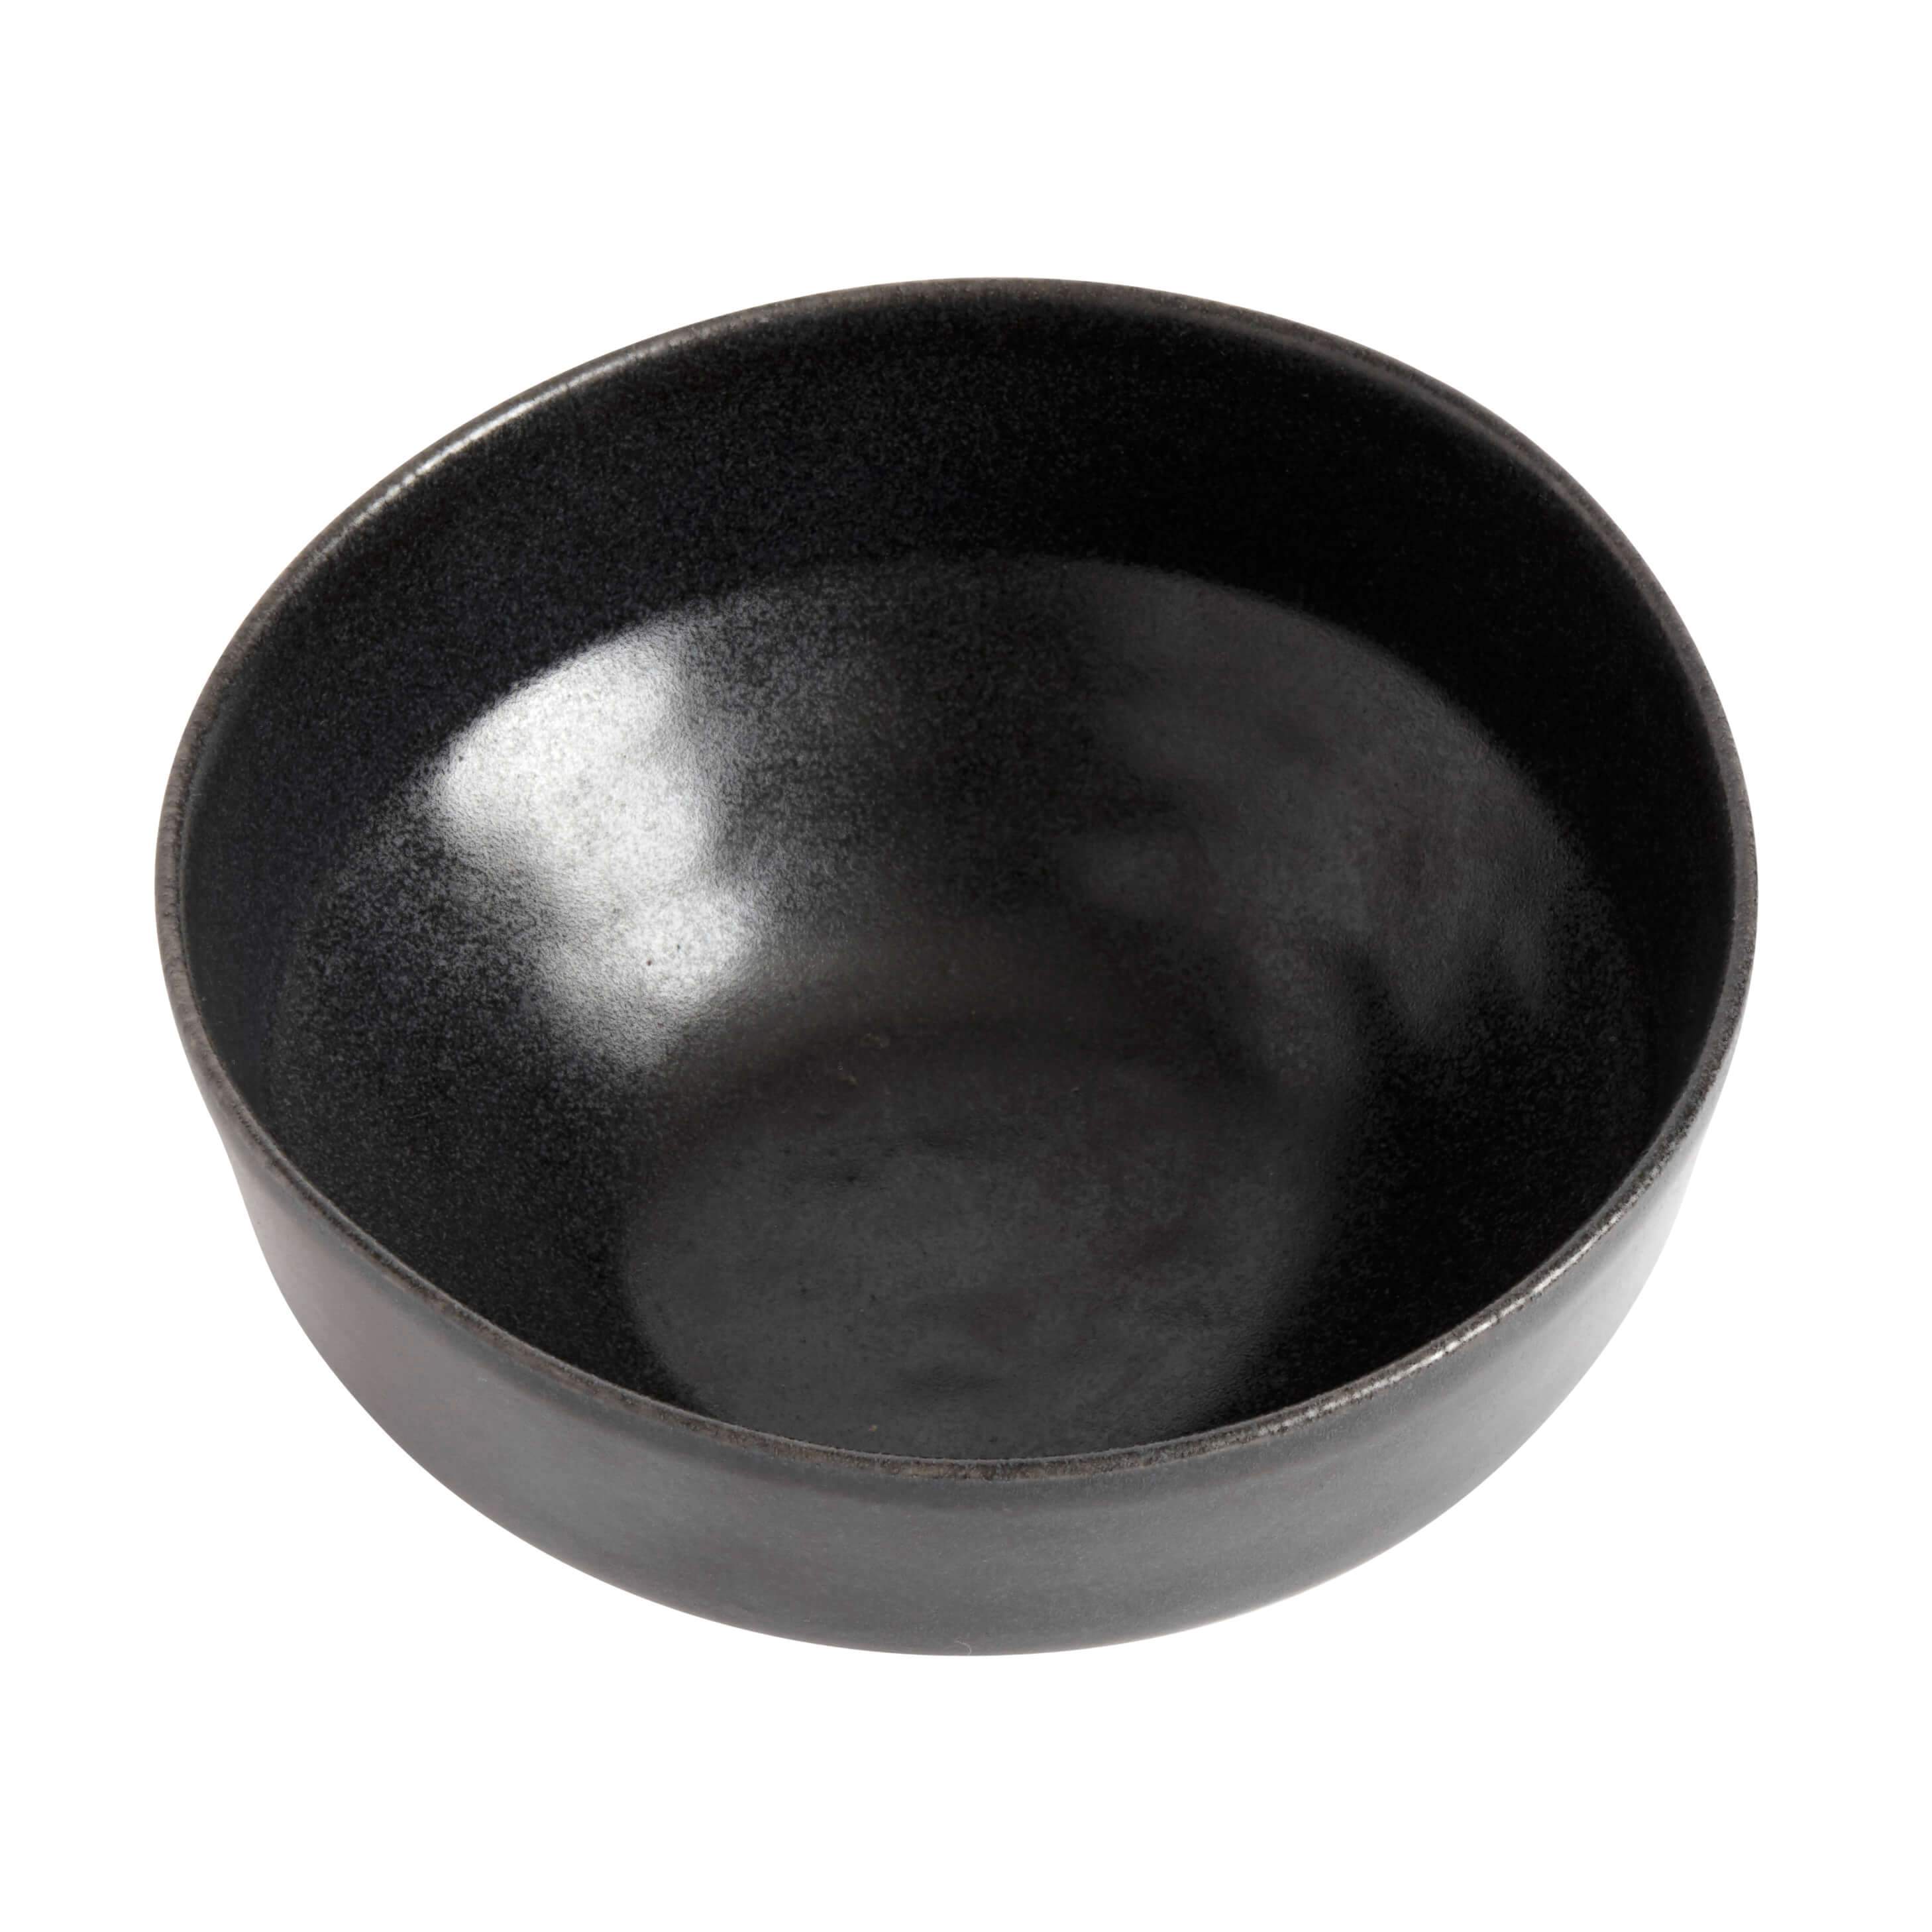 Muubs Ceto mueSli Bowl svart, 15,5 cm